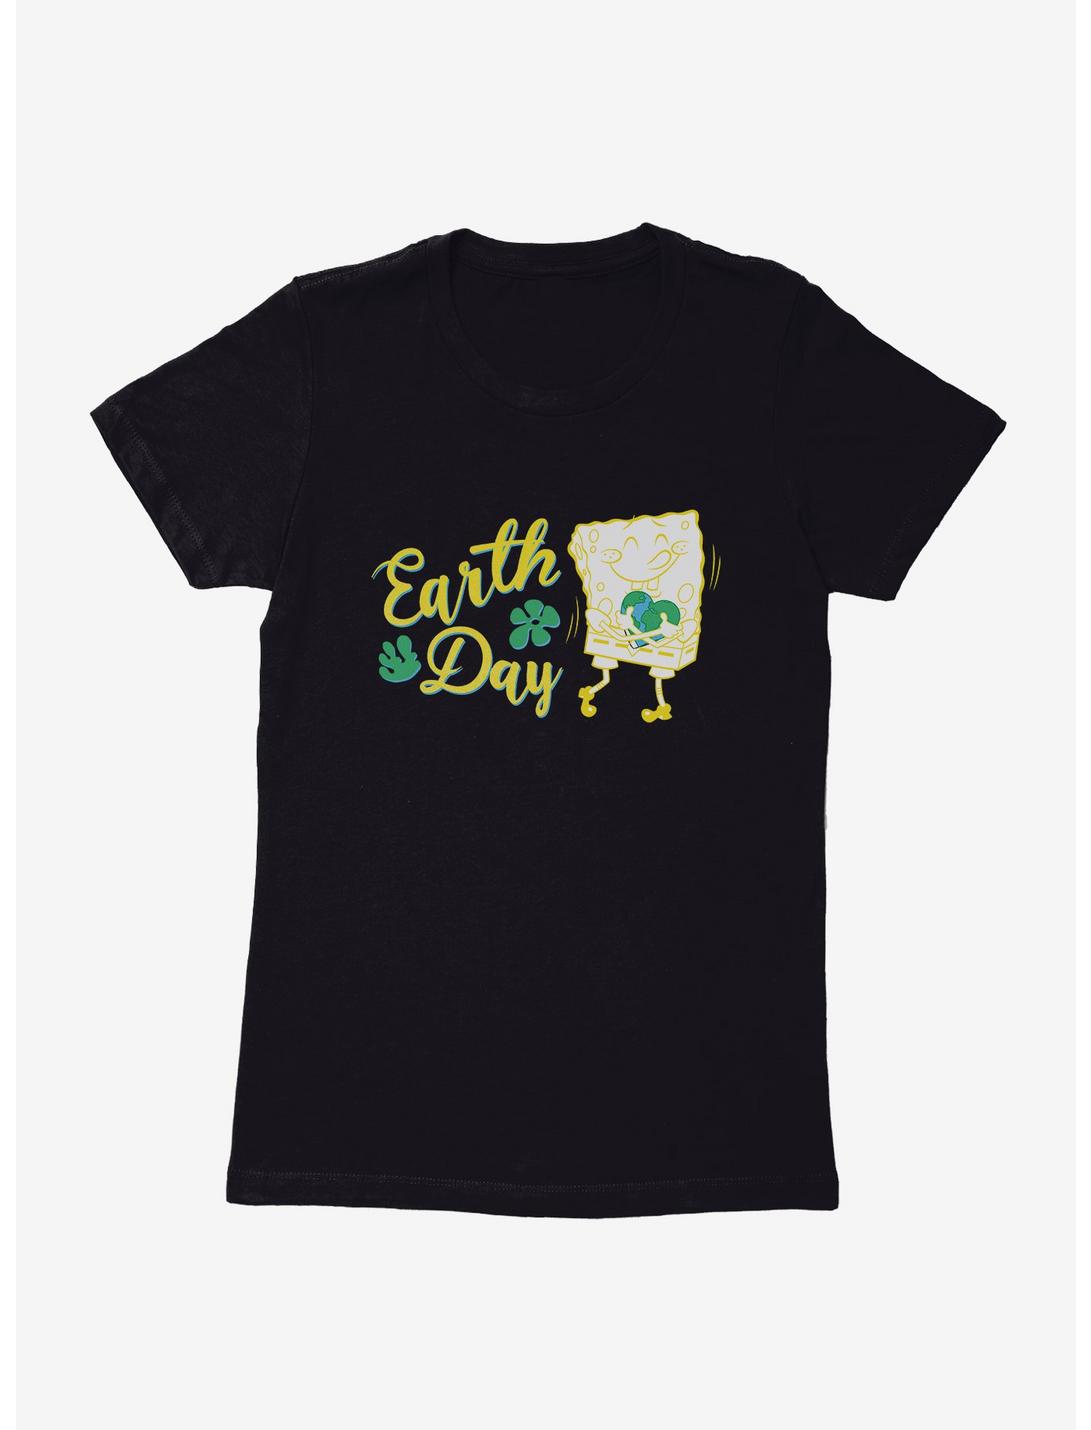 SpongeBob SquarePants Earth Day Gold Sketch Womens T-Shirt, BLACK, hi-res